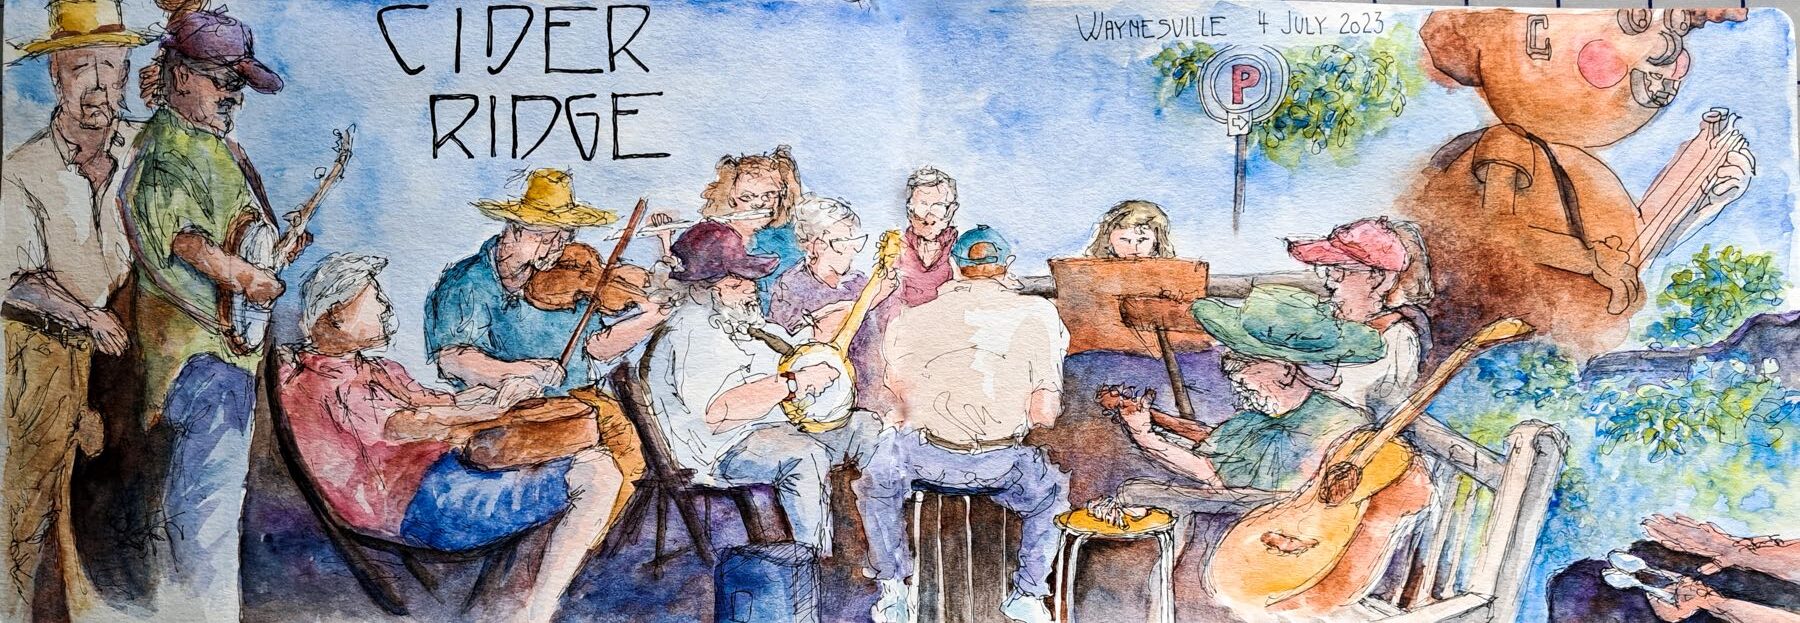 Watercolor image of Cider Ridge Band playing